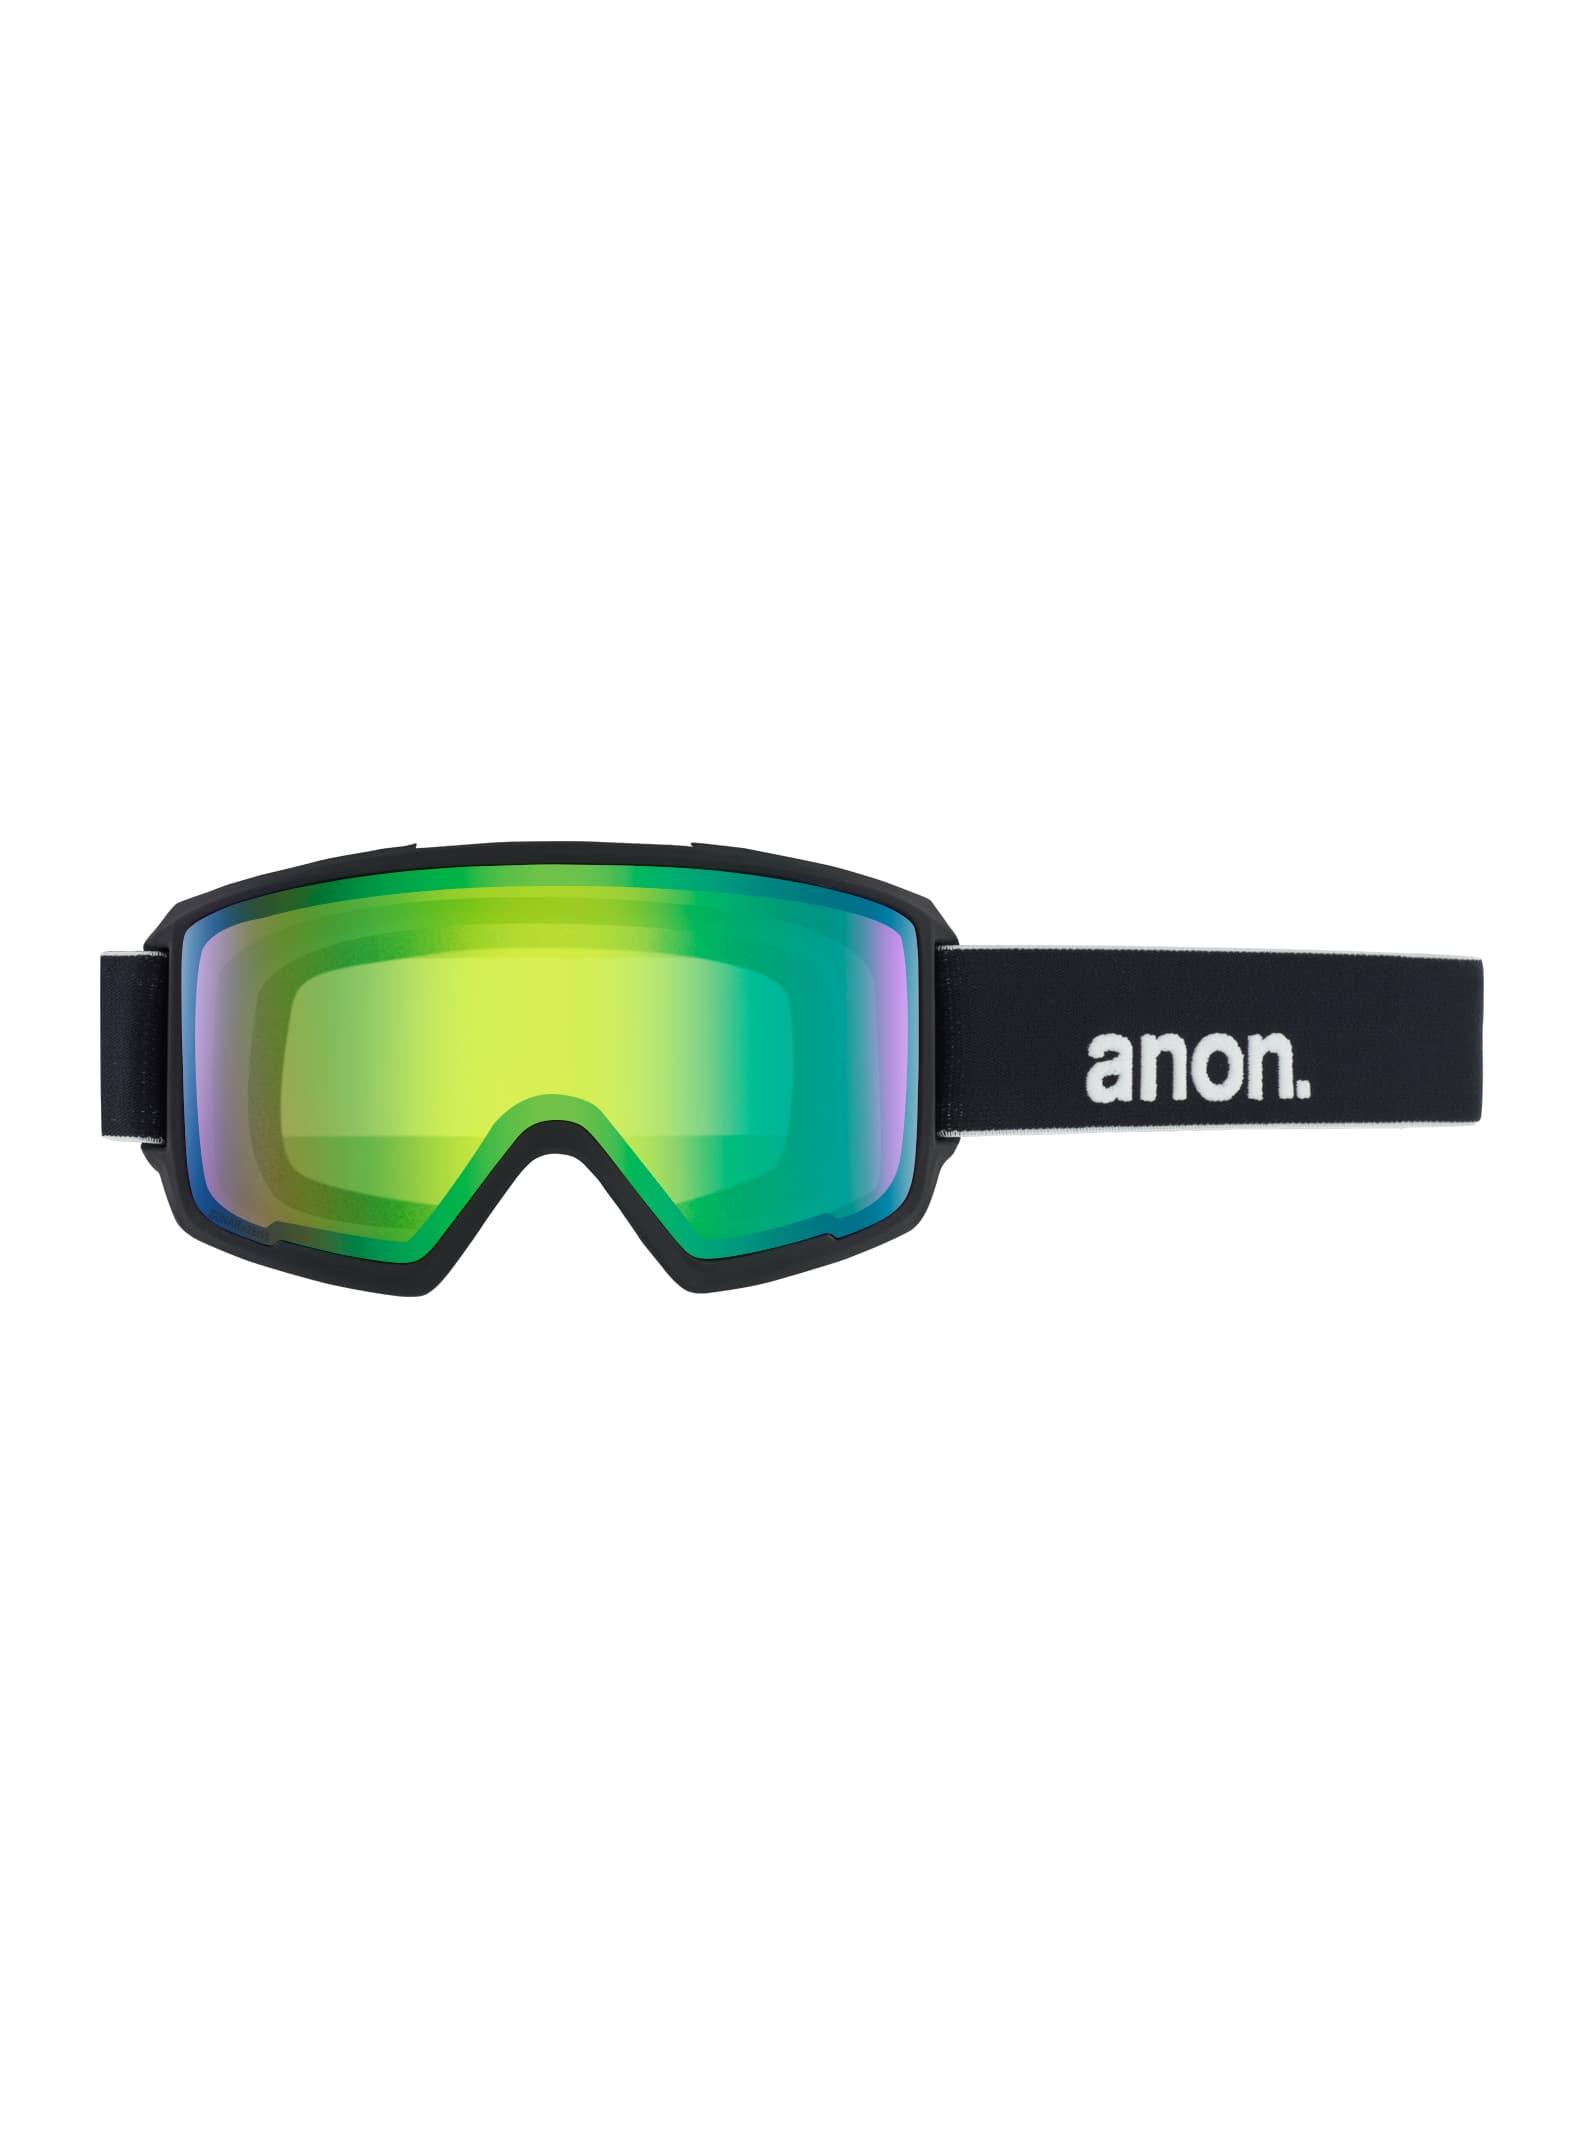 Men's Anon M3 Goggle + Spare Lens Asia Fit | Burton.com Winter 2020 US